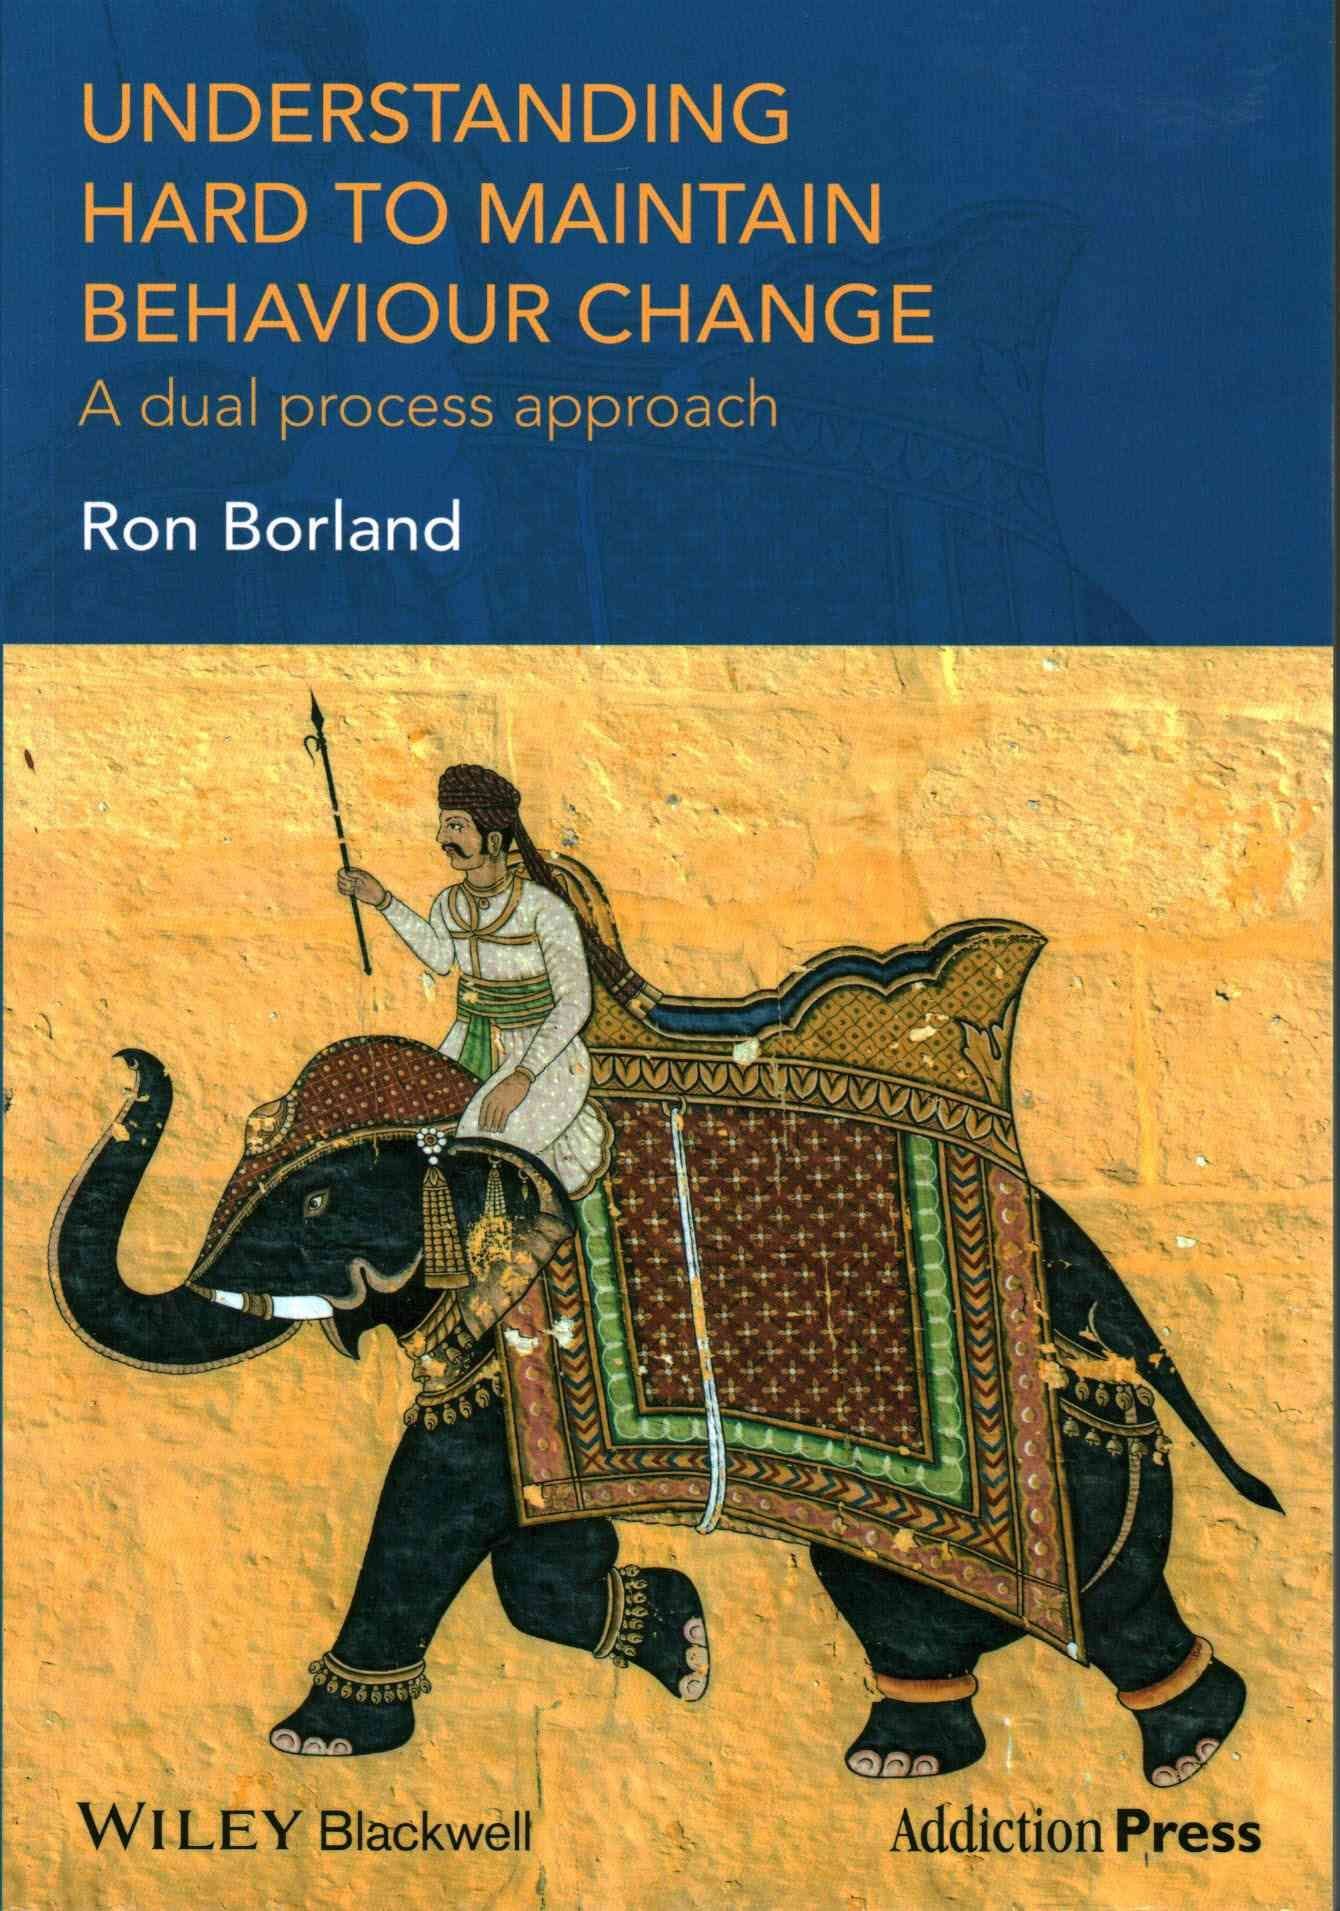 Understanding Hard to Maintain Behaviour Change - A Dual Process Approach